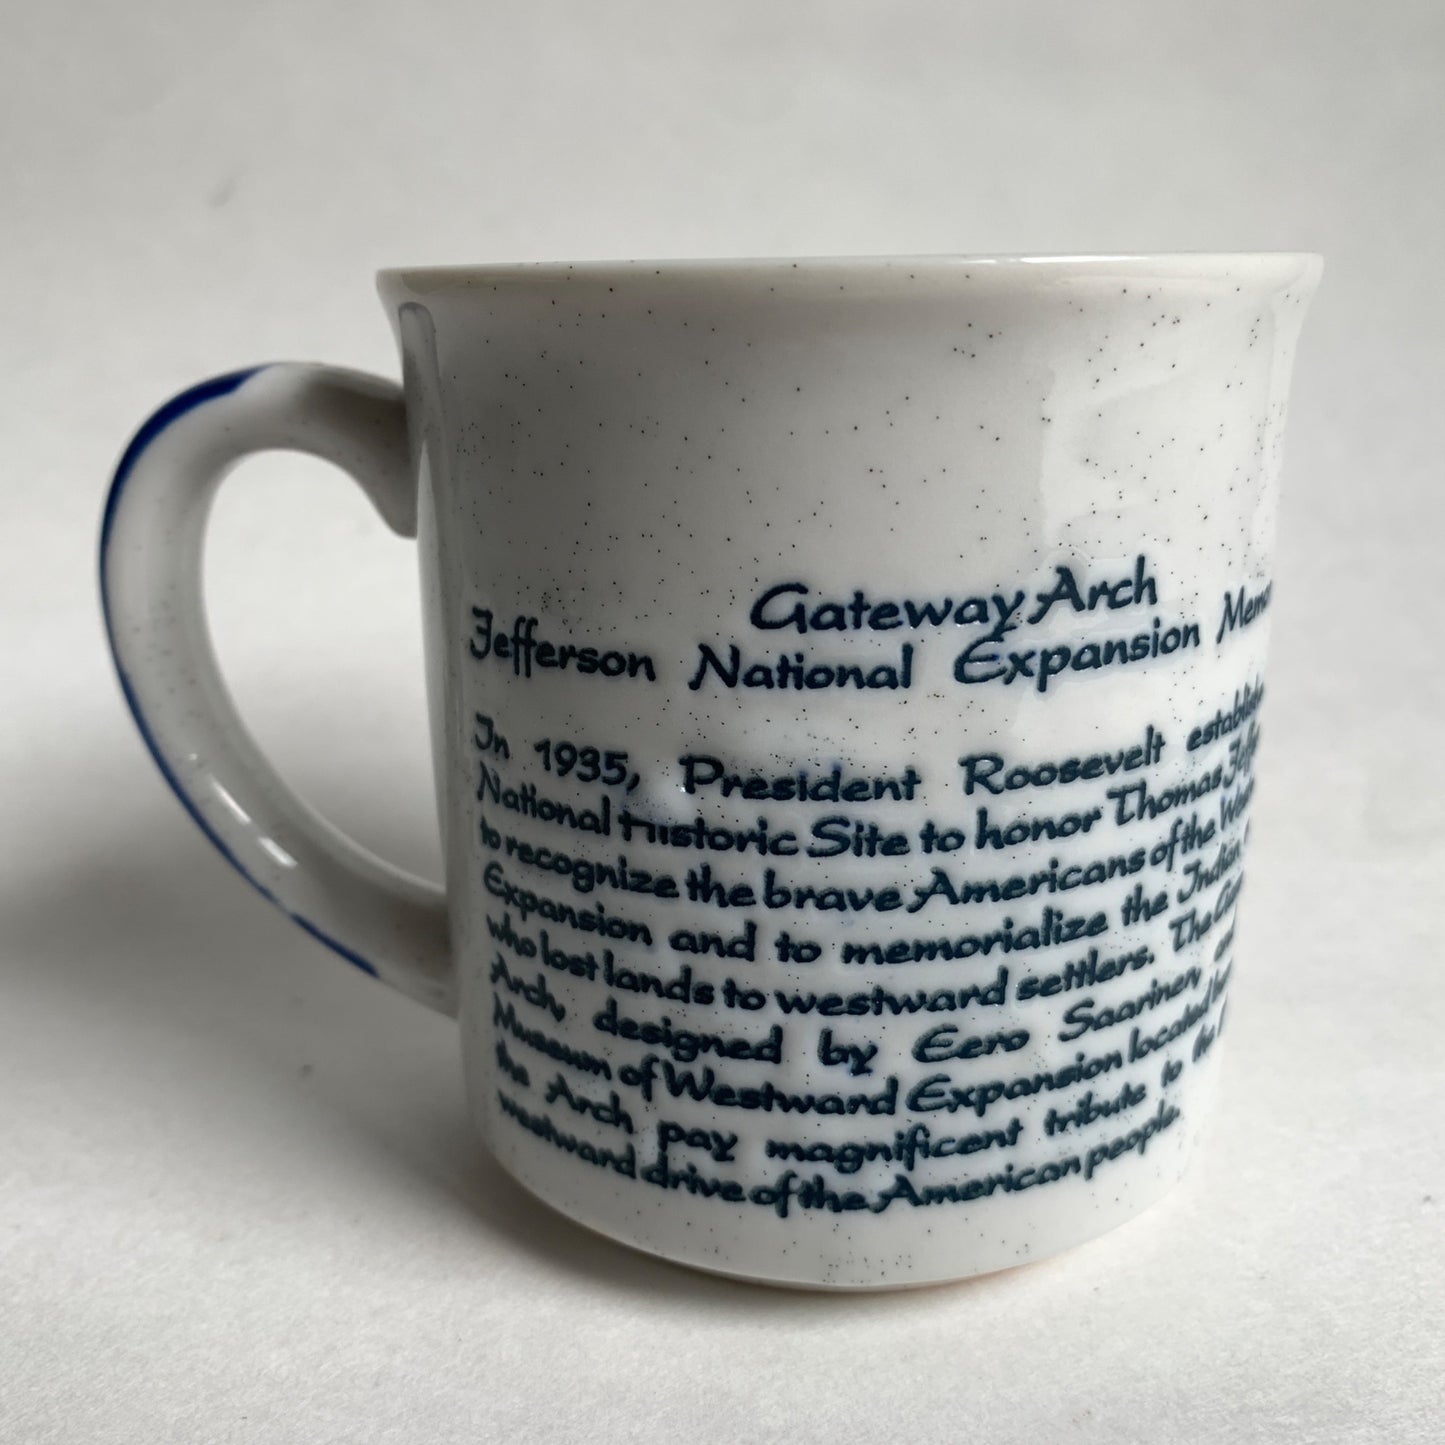 Vintage | Gateway Arch Saint Louis Blue Speckled Coffee Mug